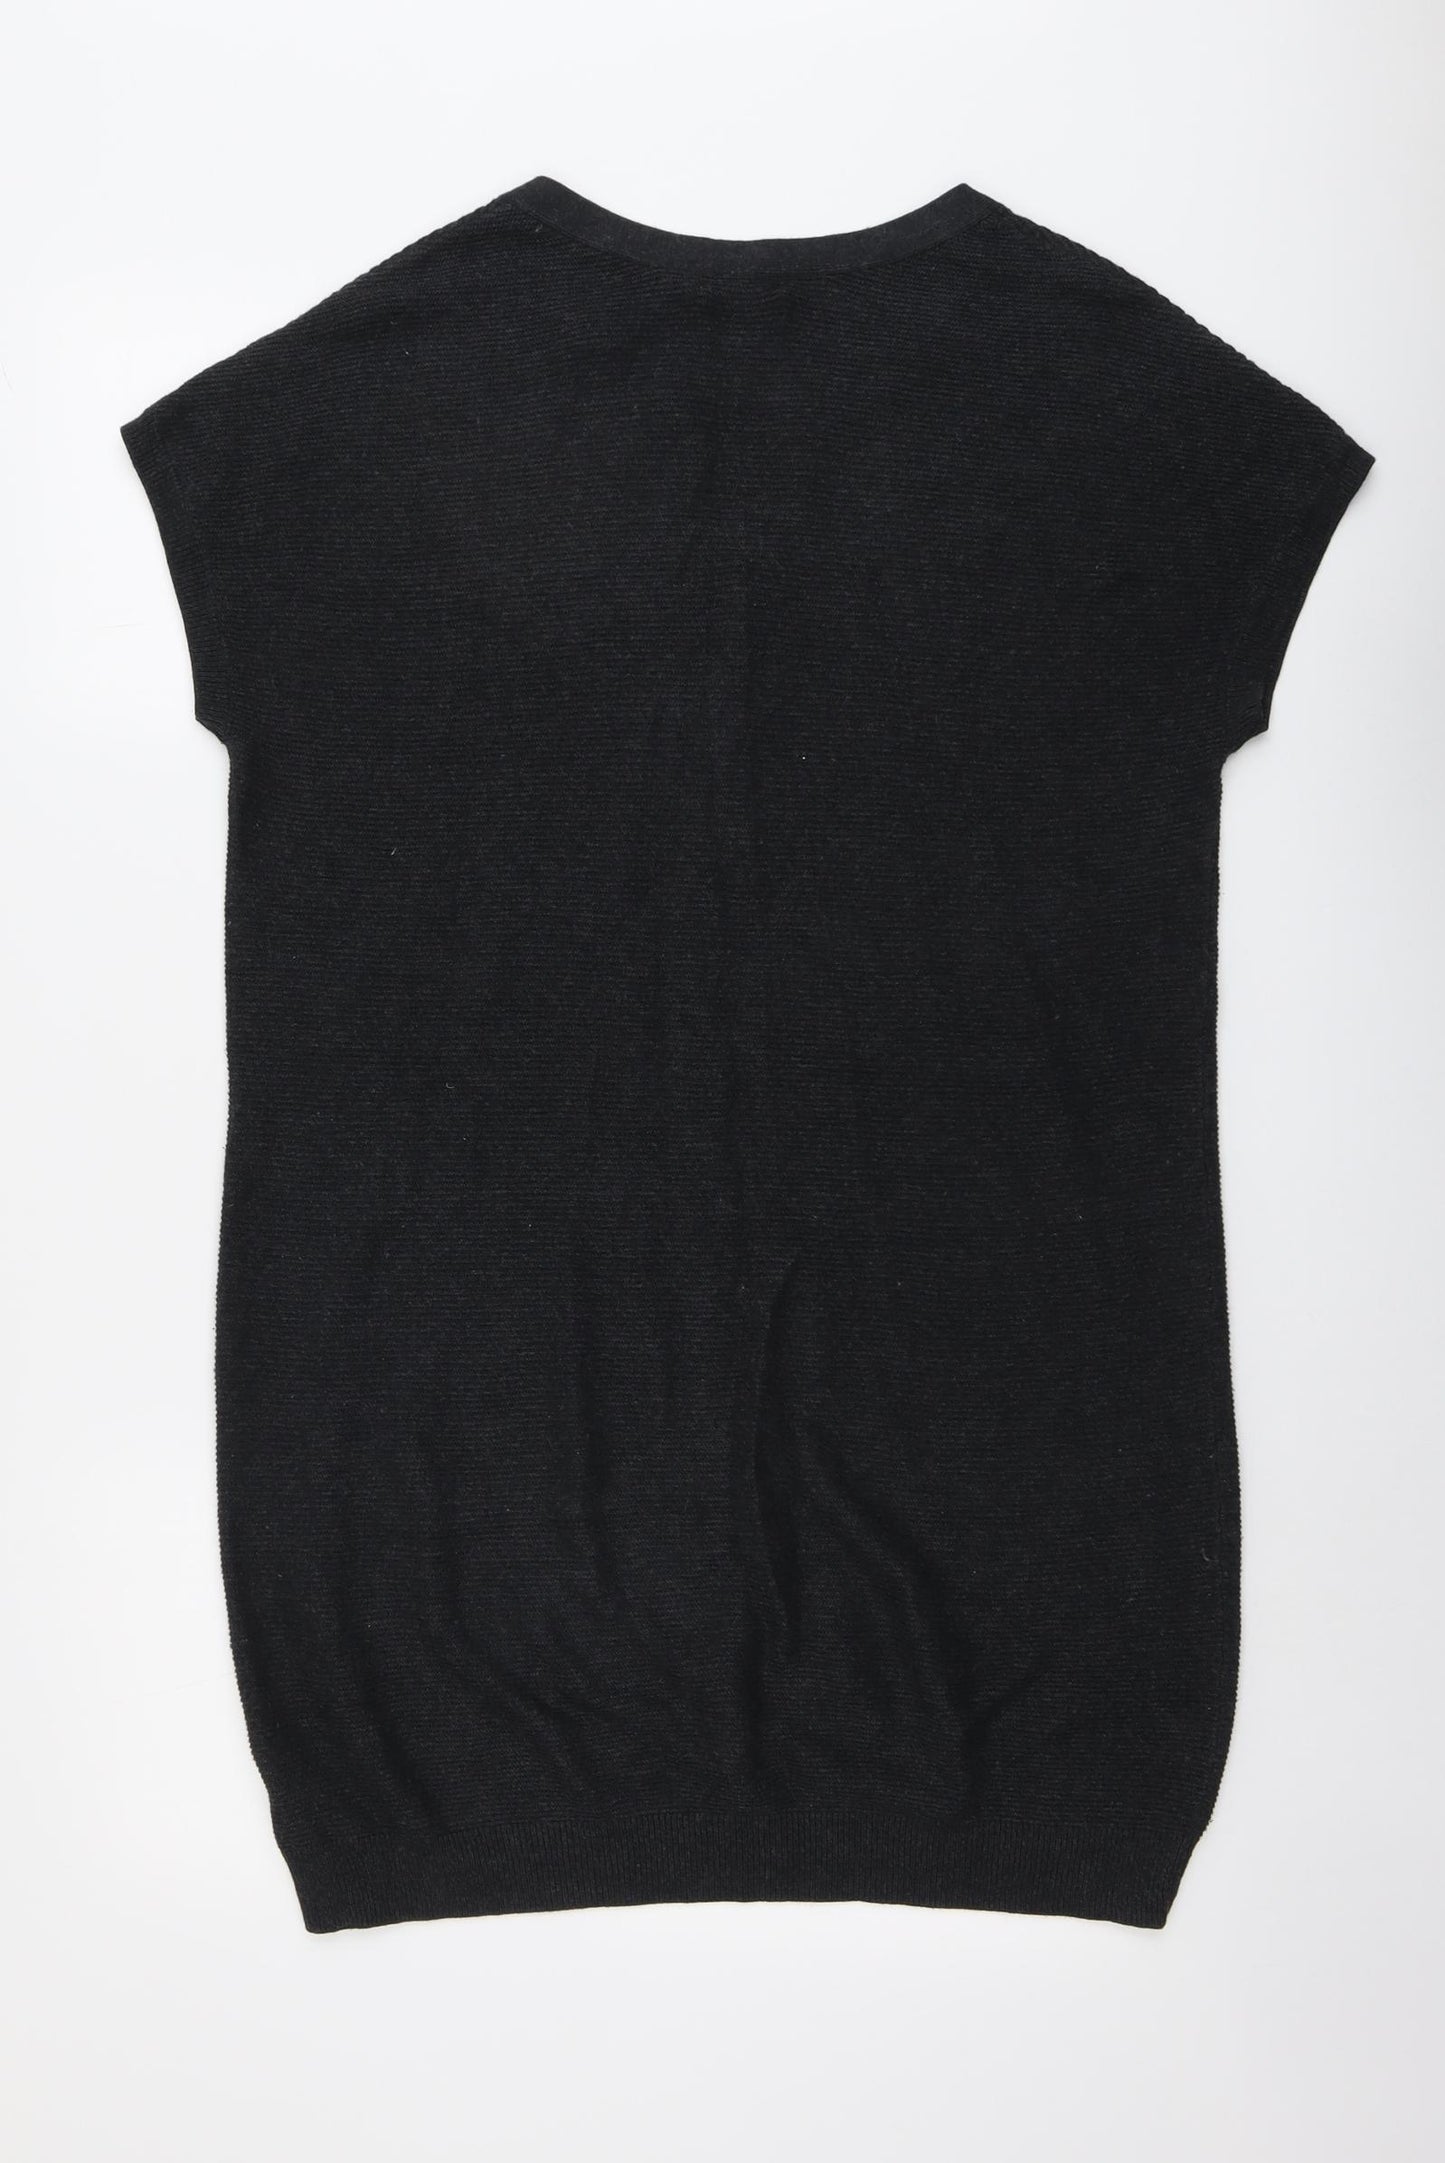 Gap Womens Grey Cotton Jumper Dress Size M V-Neck Pullover